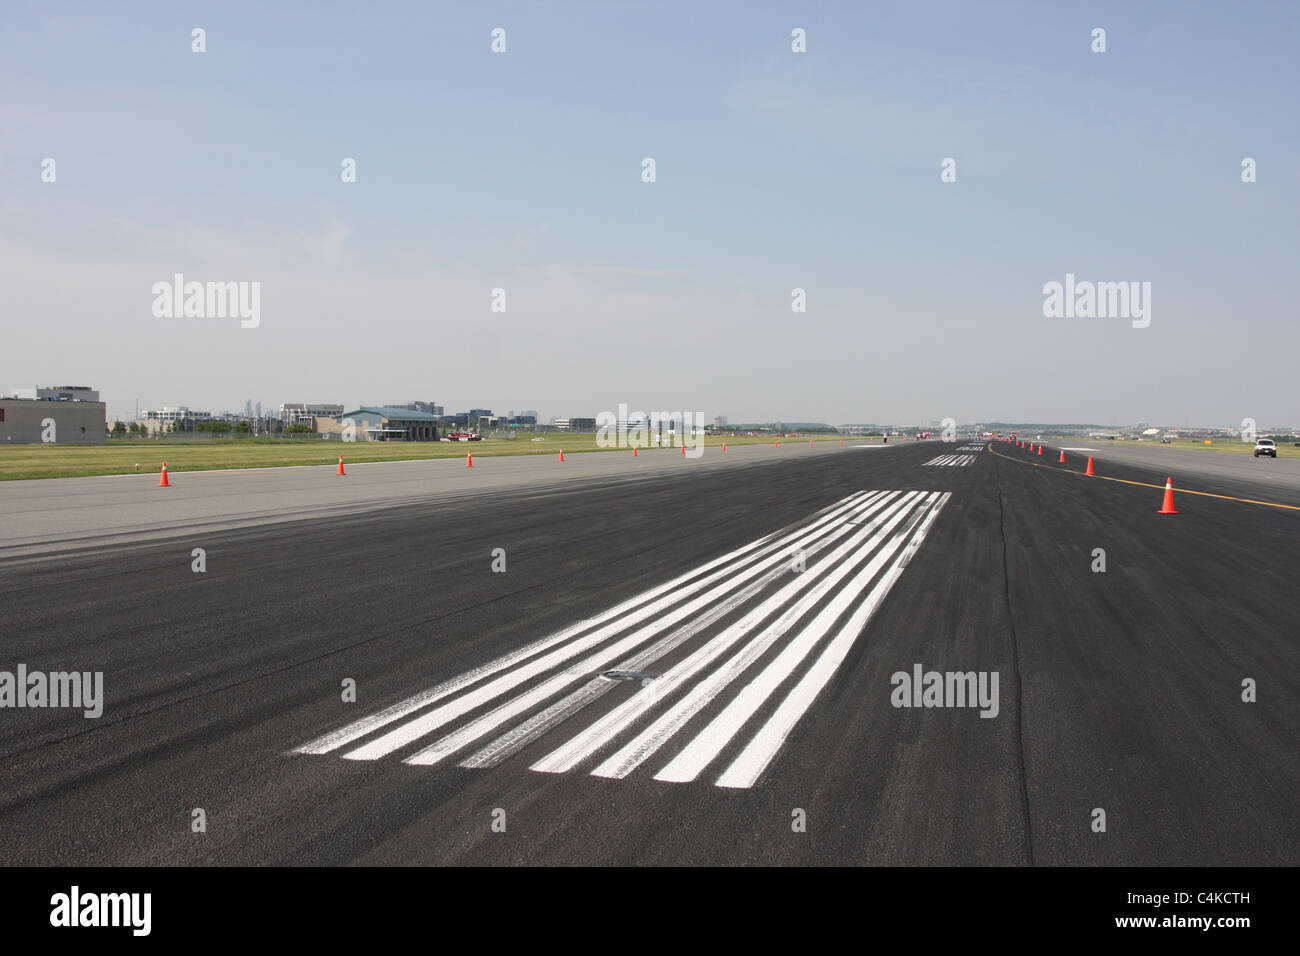 empty airport runway Stock Photo